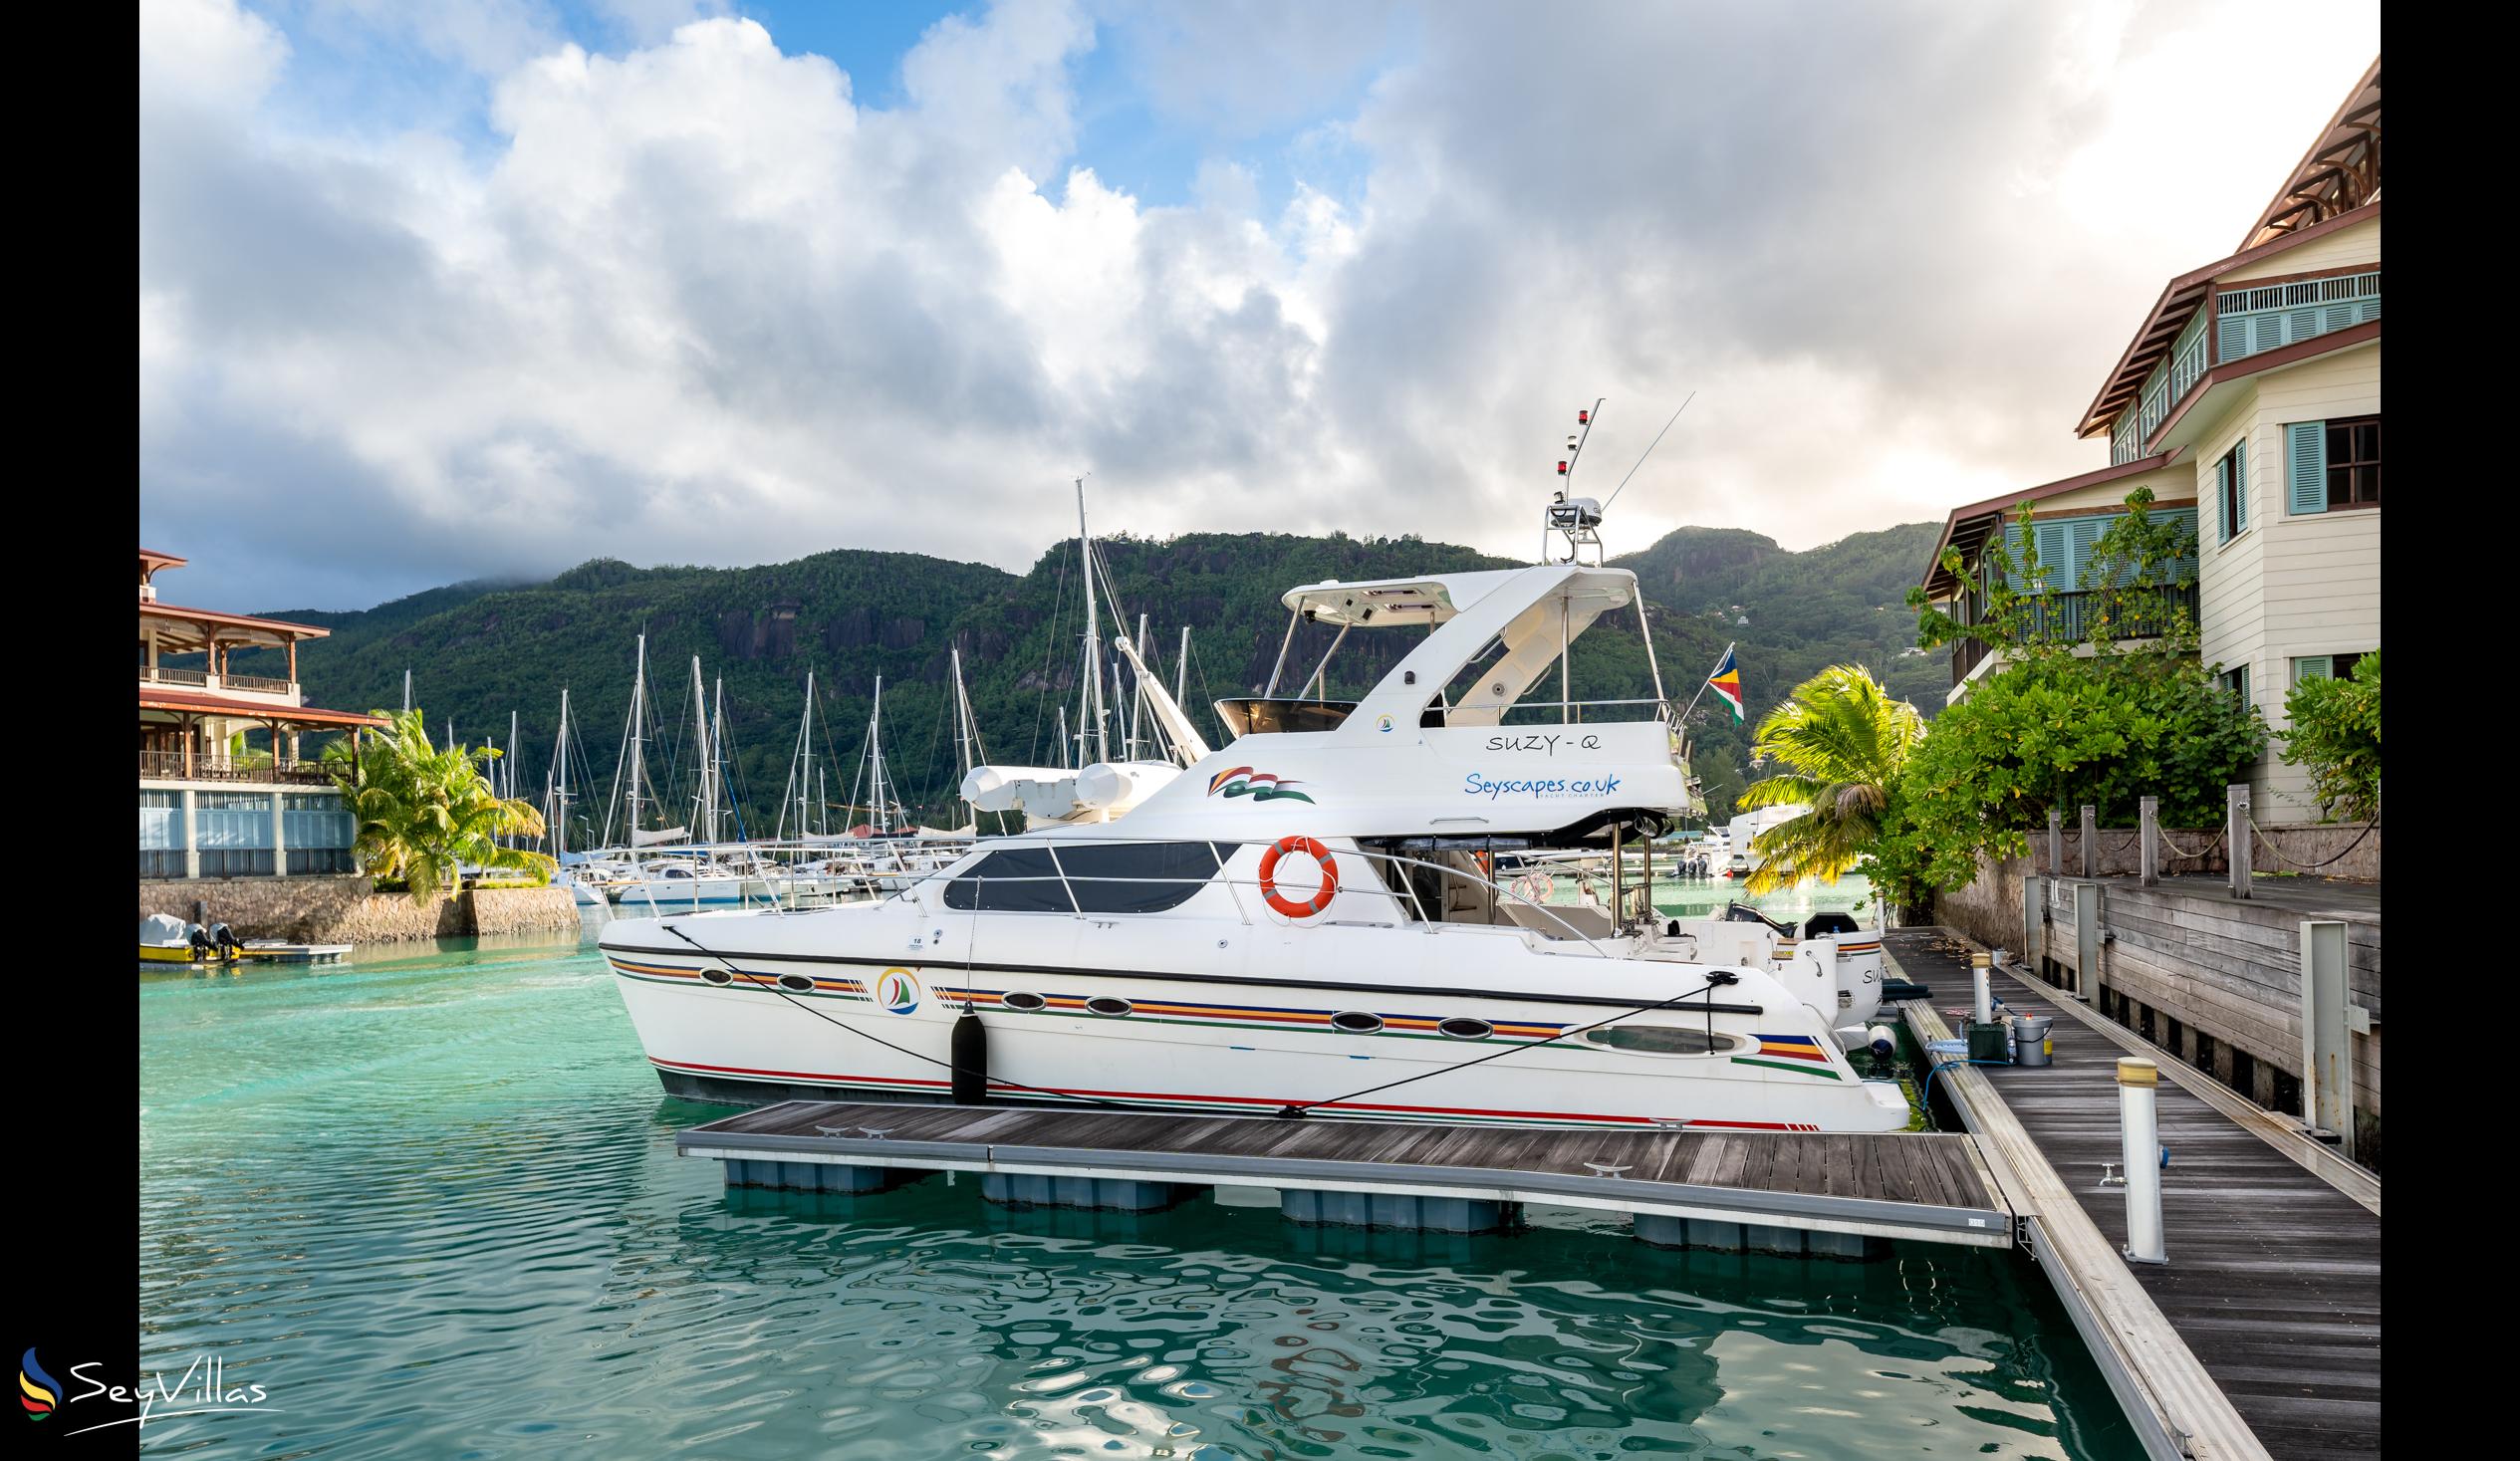 Foto 57: Seyscapes Yacht Charter - Vollcharter Suzy Q - Seychellen (Seychellen)